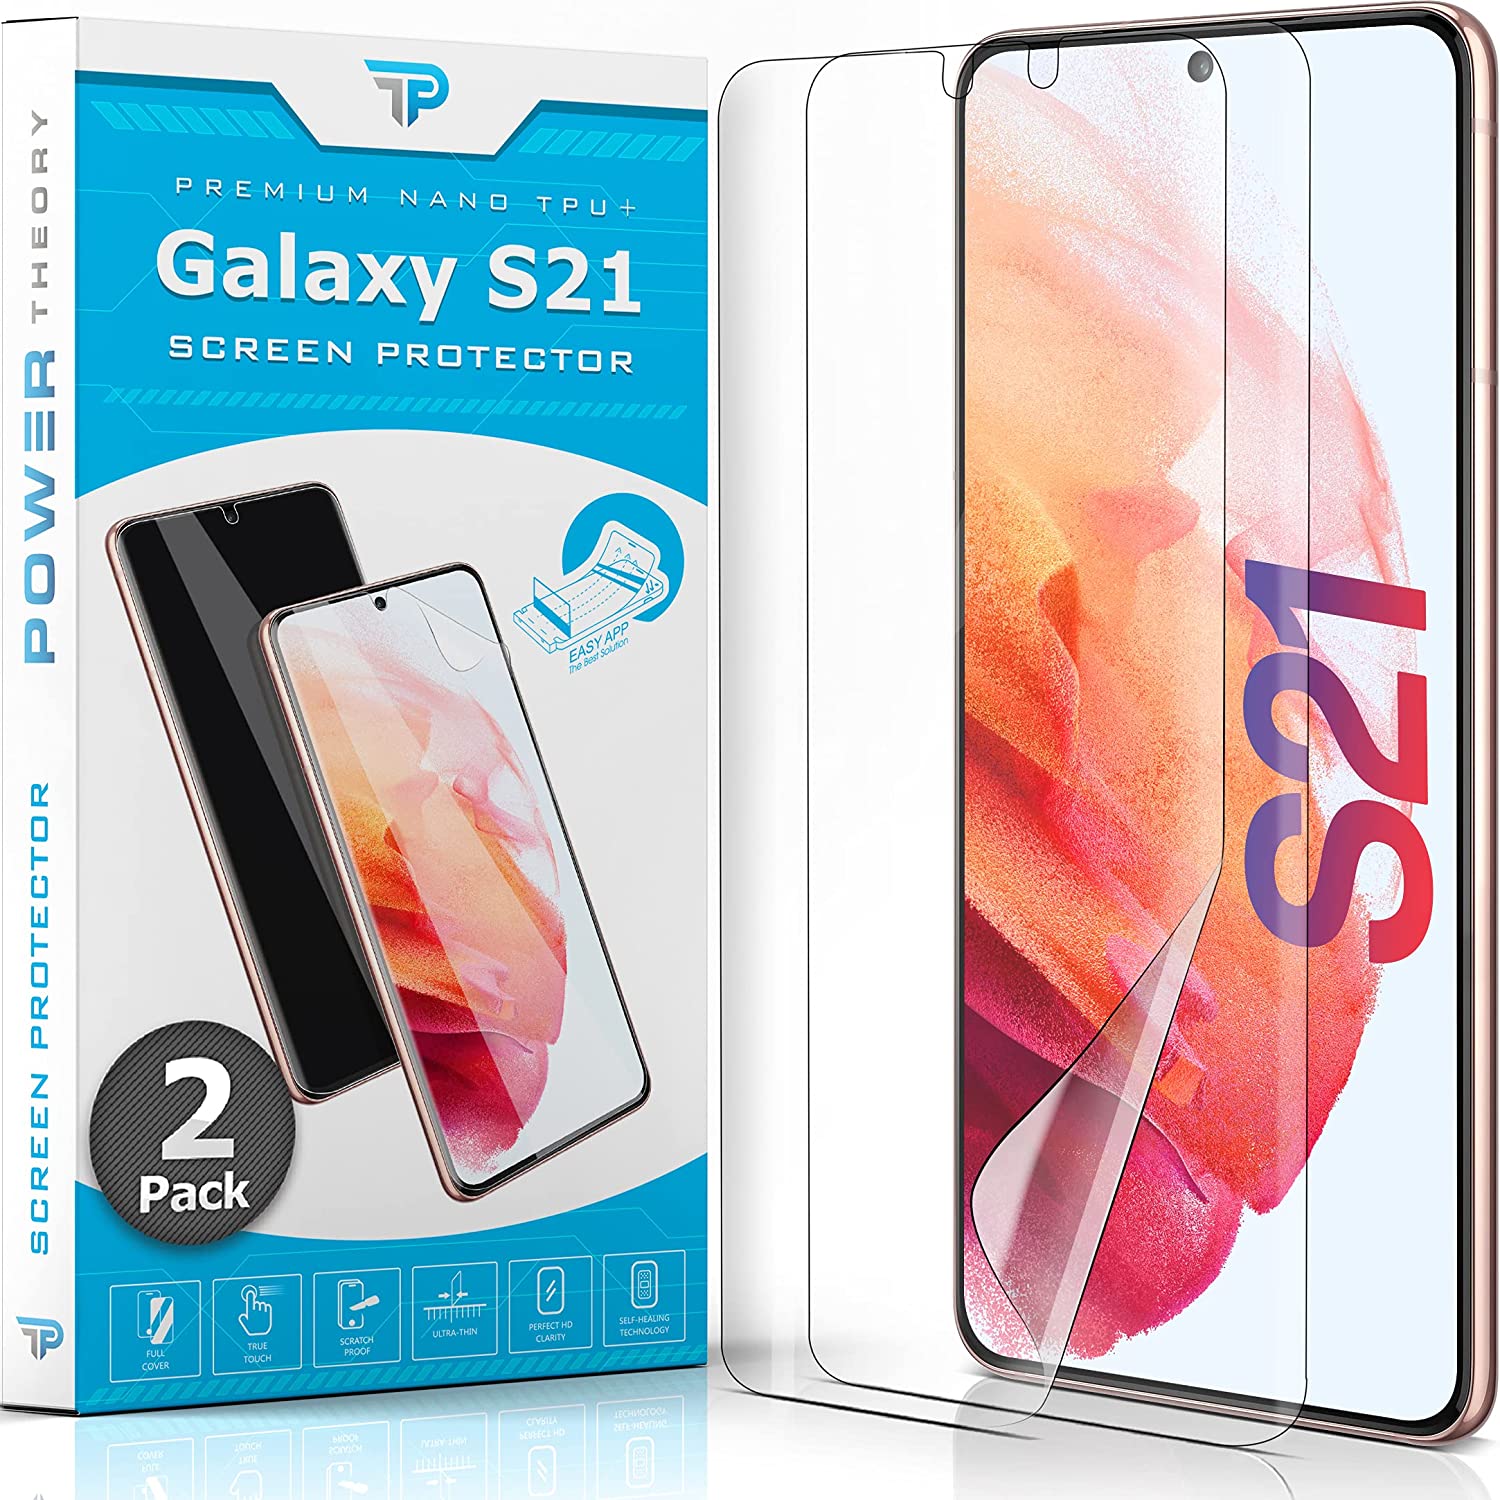 Samsung Galaxy S21 Anti-Scratch Screen Protector Film [2-Pack]